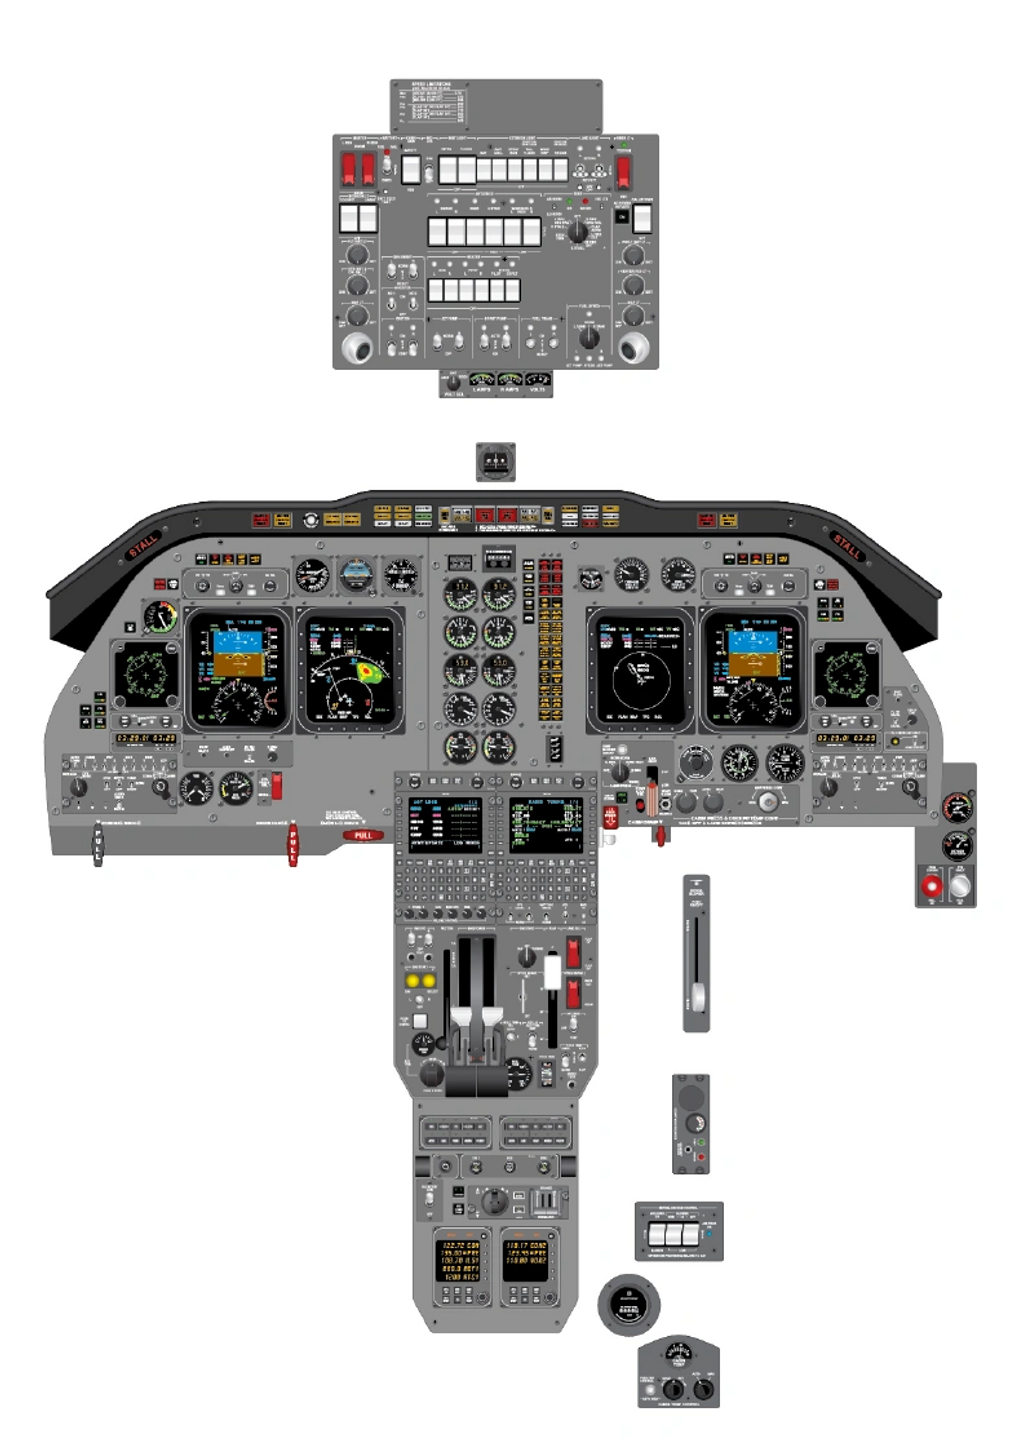 Pro Train Beechjet 400A cockpit poster - proline 4